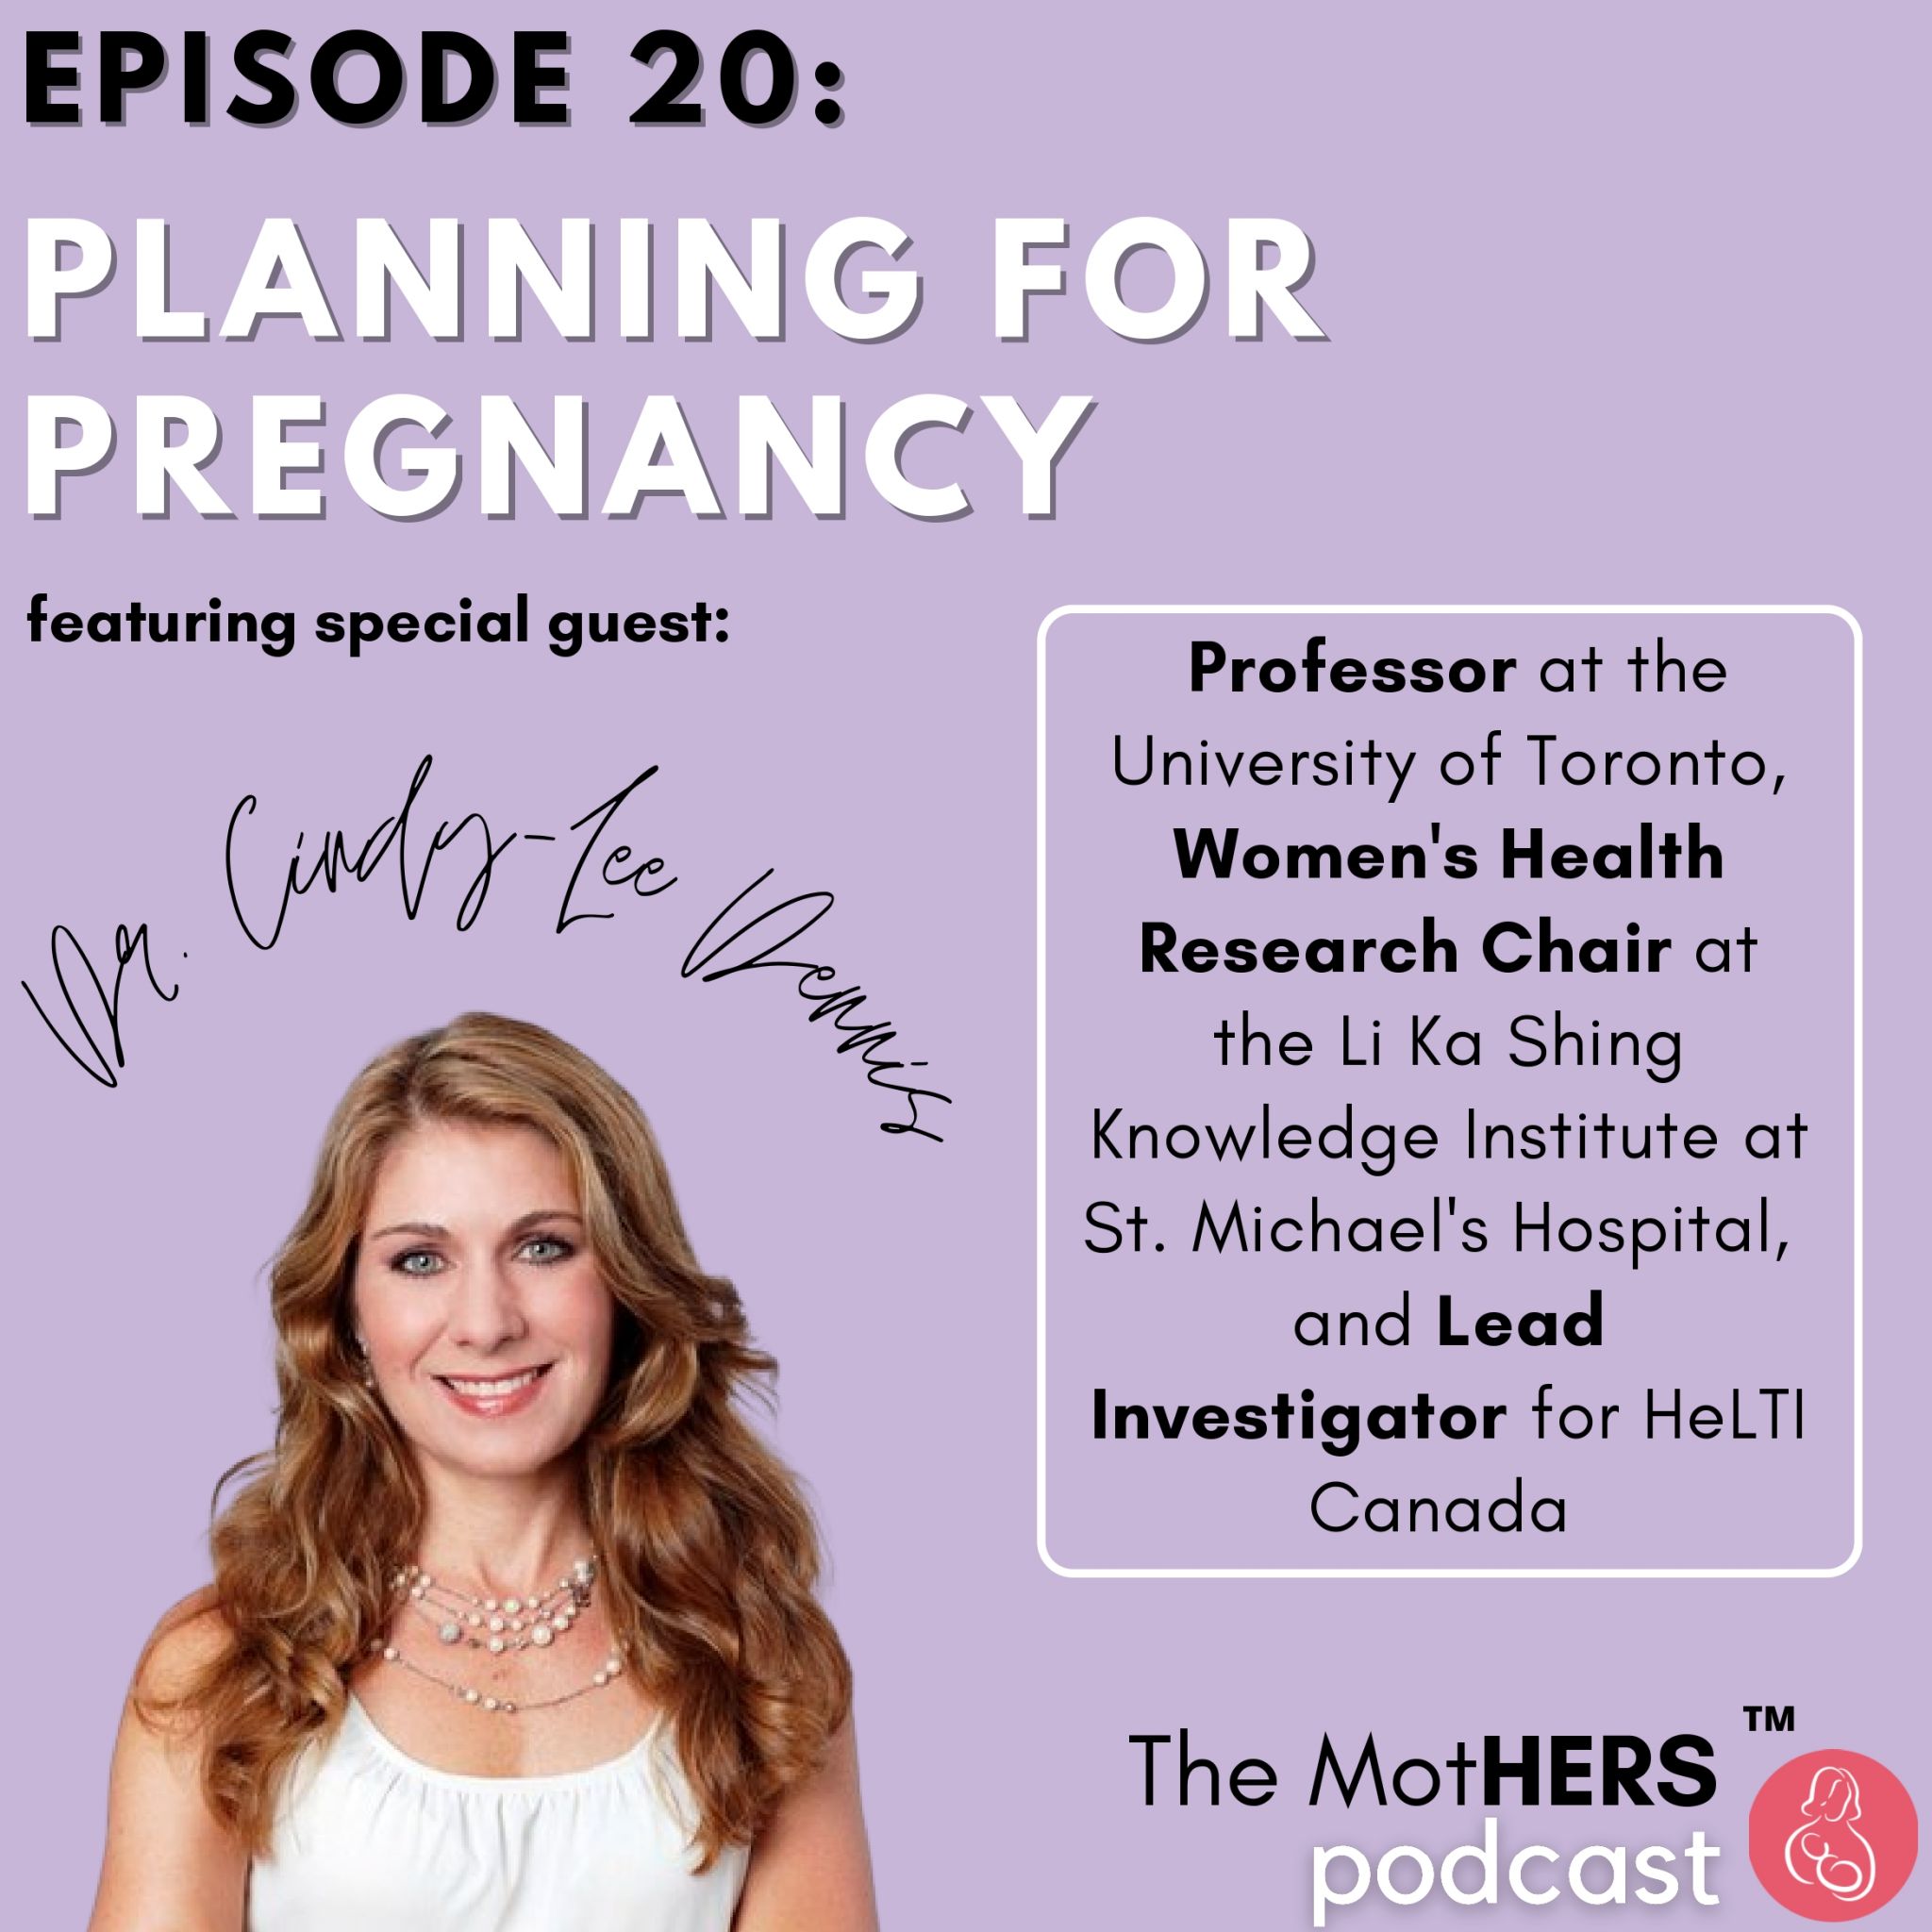 Episode 20 Planning for pregnancy featuring Dr. Cindy-Lee Dennis